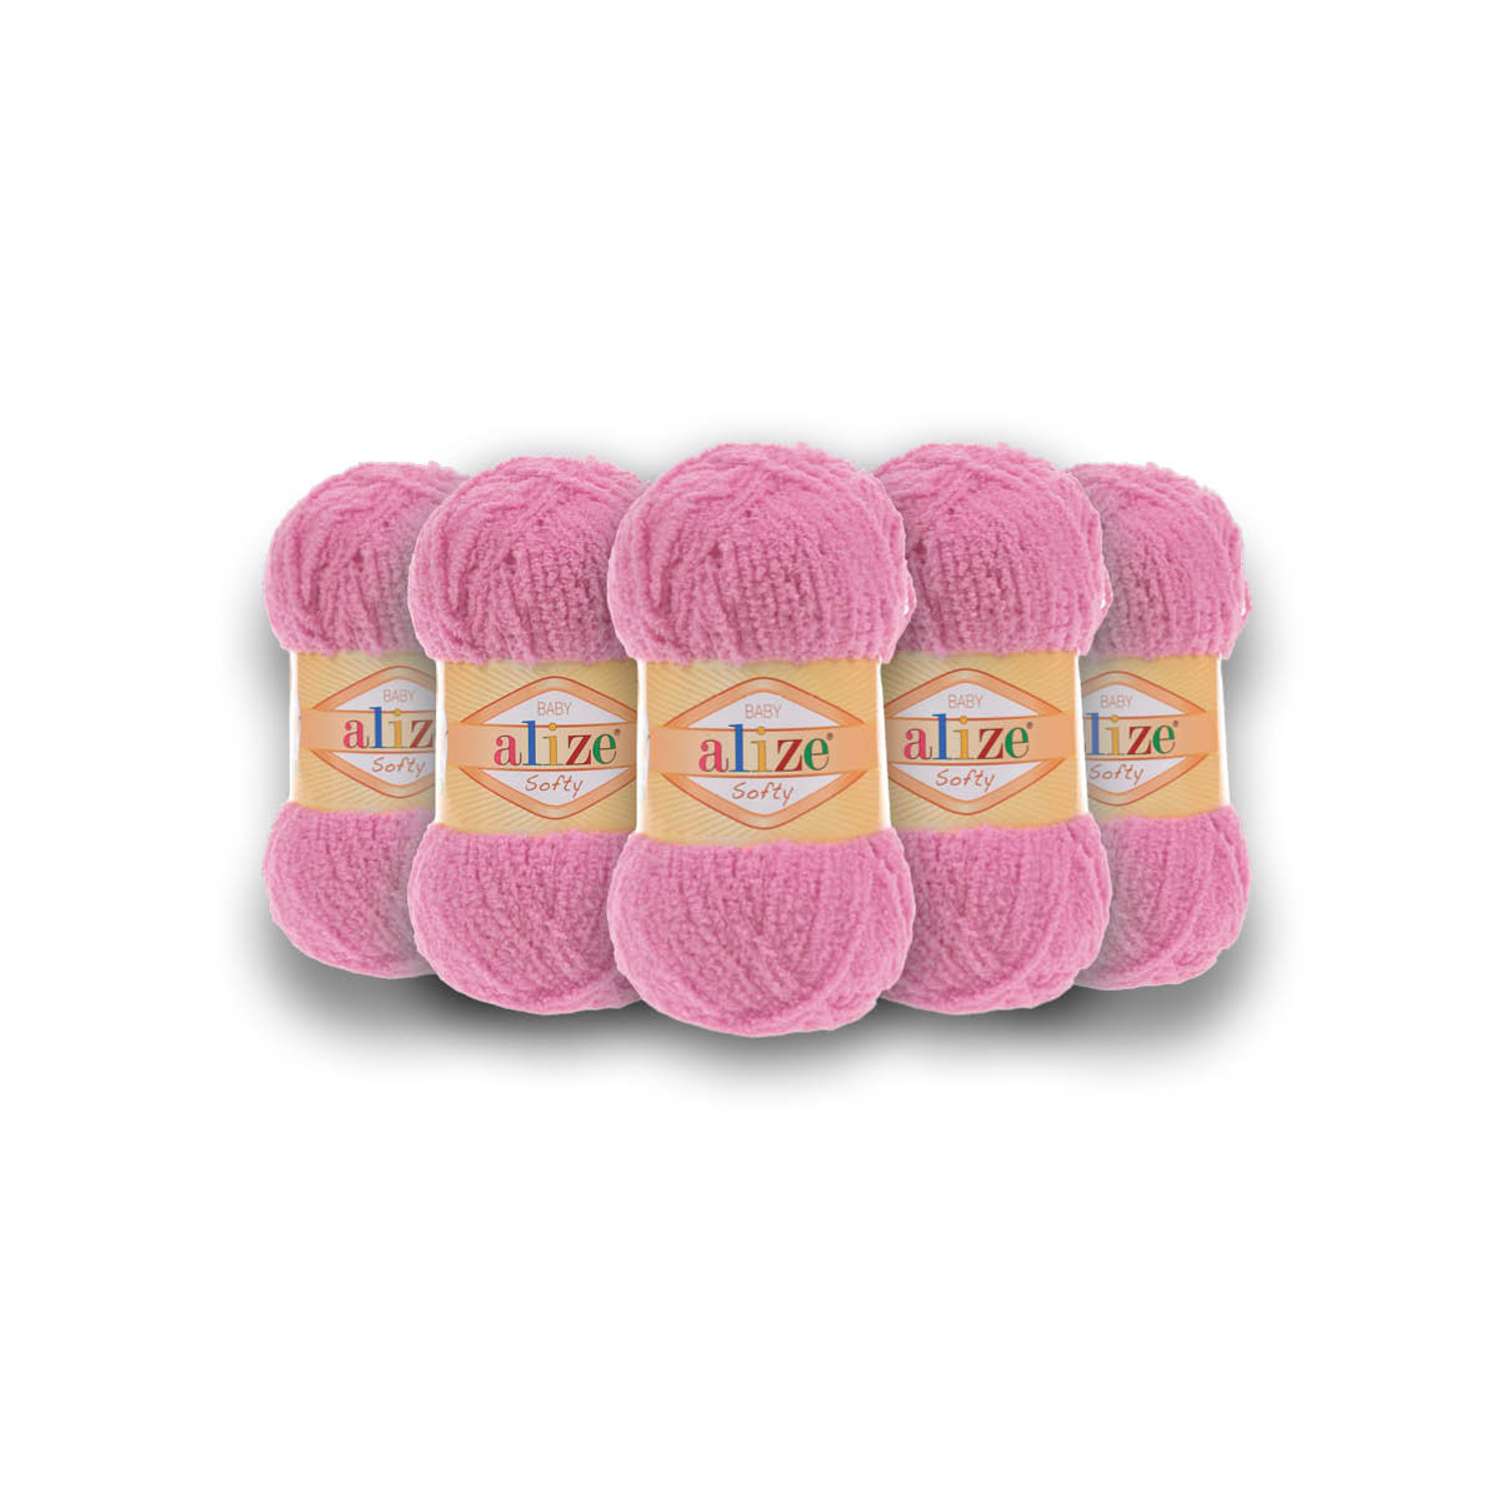 Пряжа для вязания Alize softy 50 гр 115 м микрополиэстер мягкая фантазийная 191 светло-розовый 5 мотков - фото 4